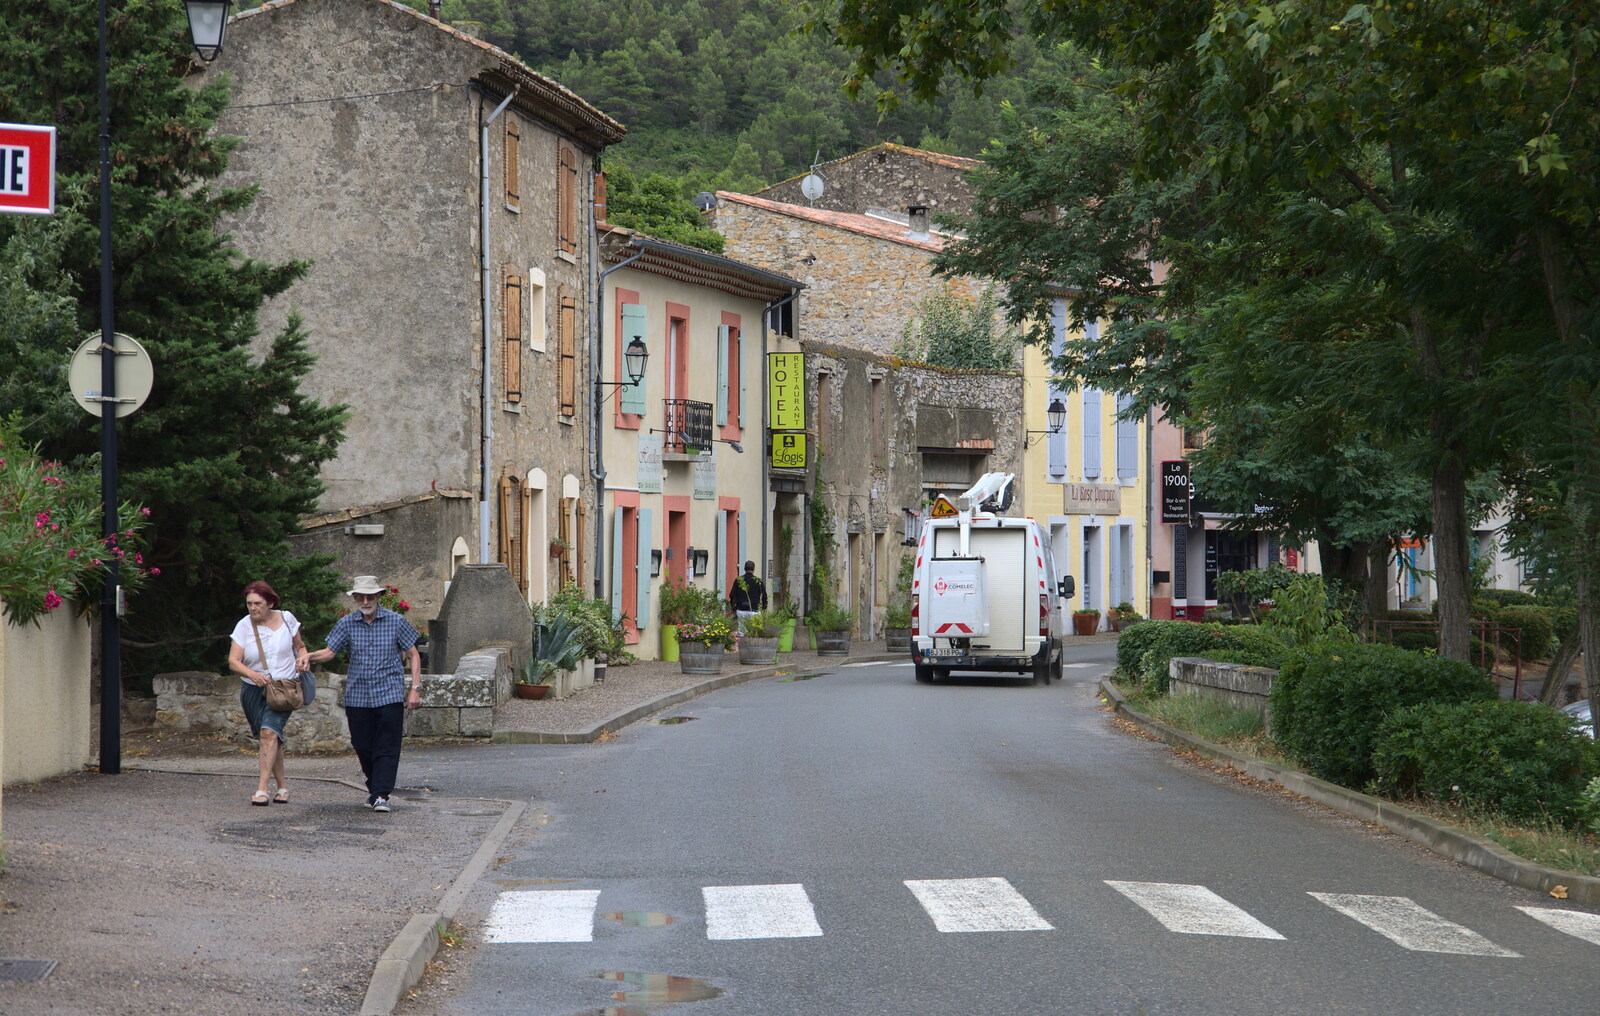 The town of Lagrasse from Abbaye Sainte-Marie de Lagrasse and The Lac de la Cavayère, Aude, France - 10th August